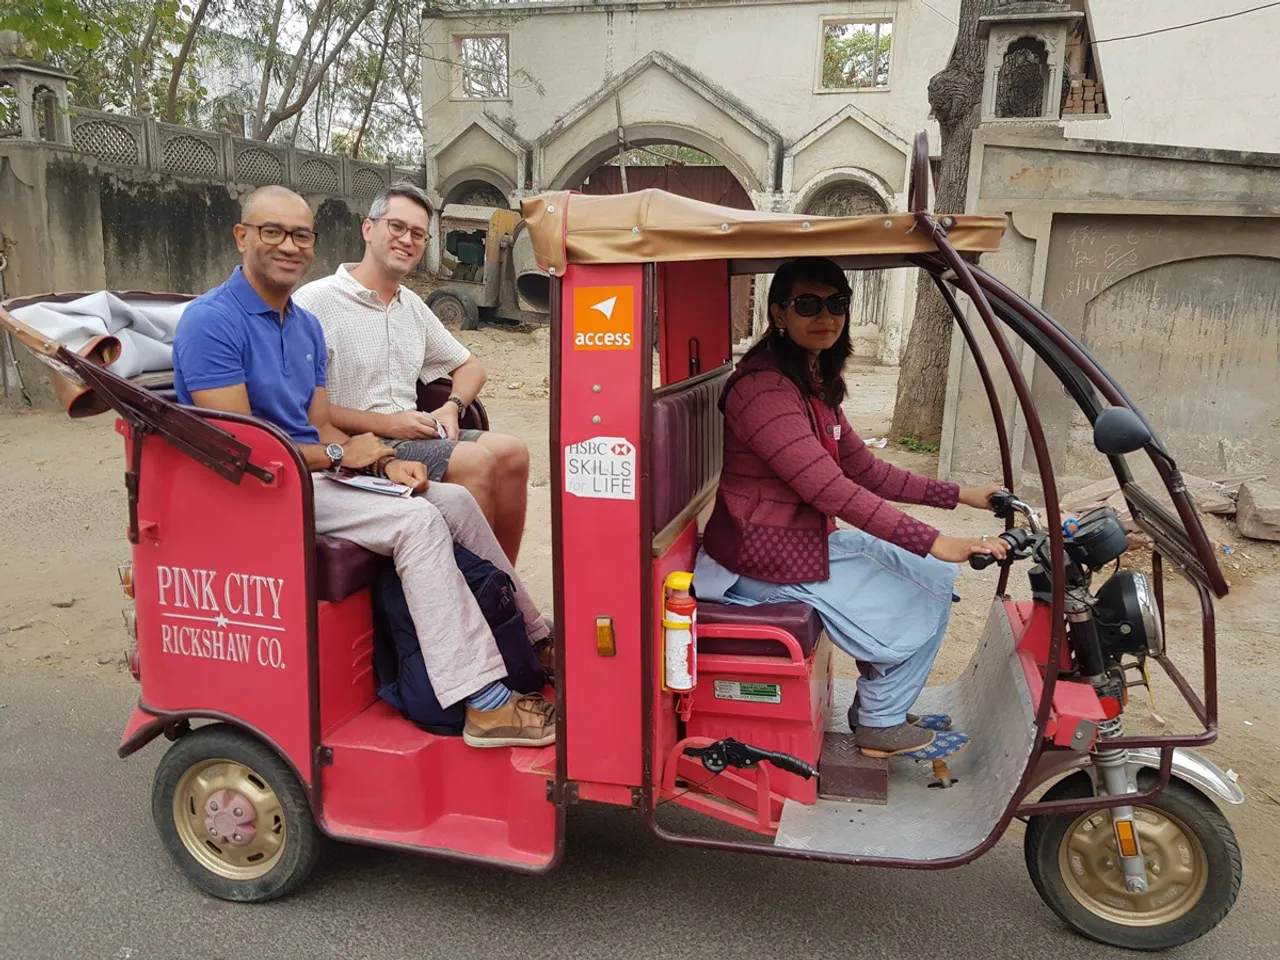 Pink City Rickshaw Company has trained 200 women so far